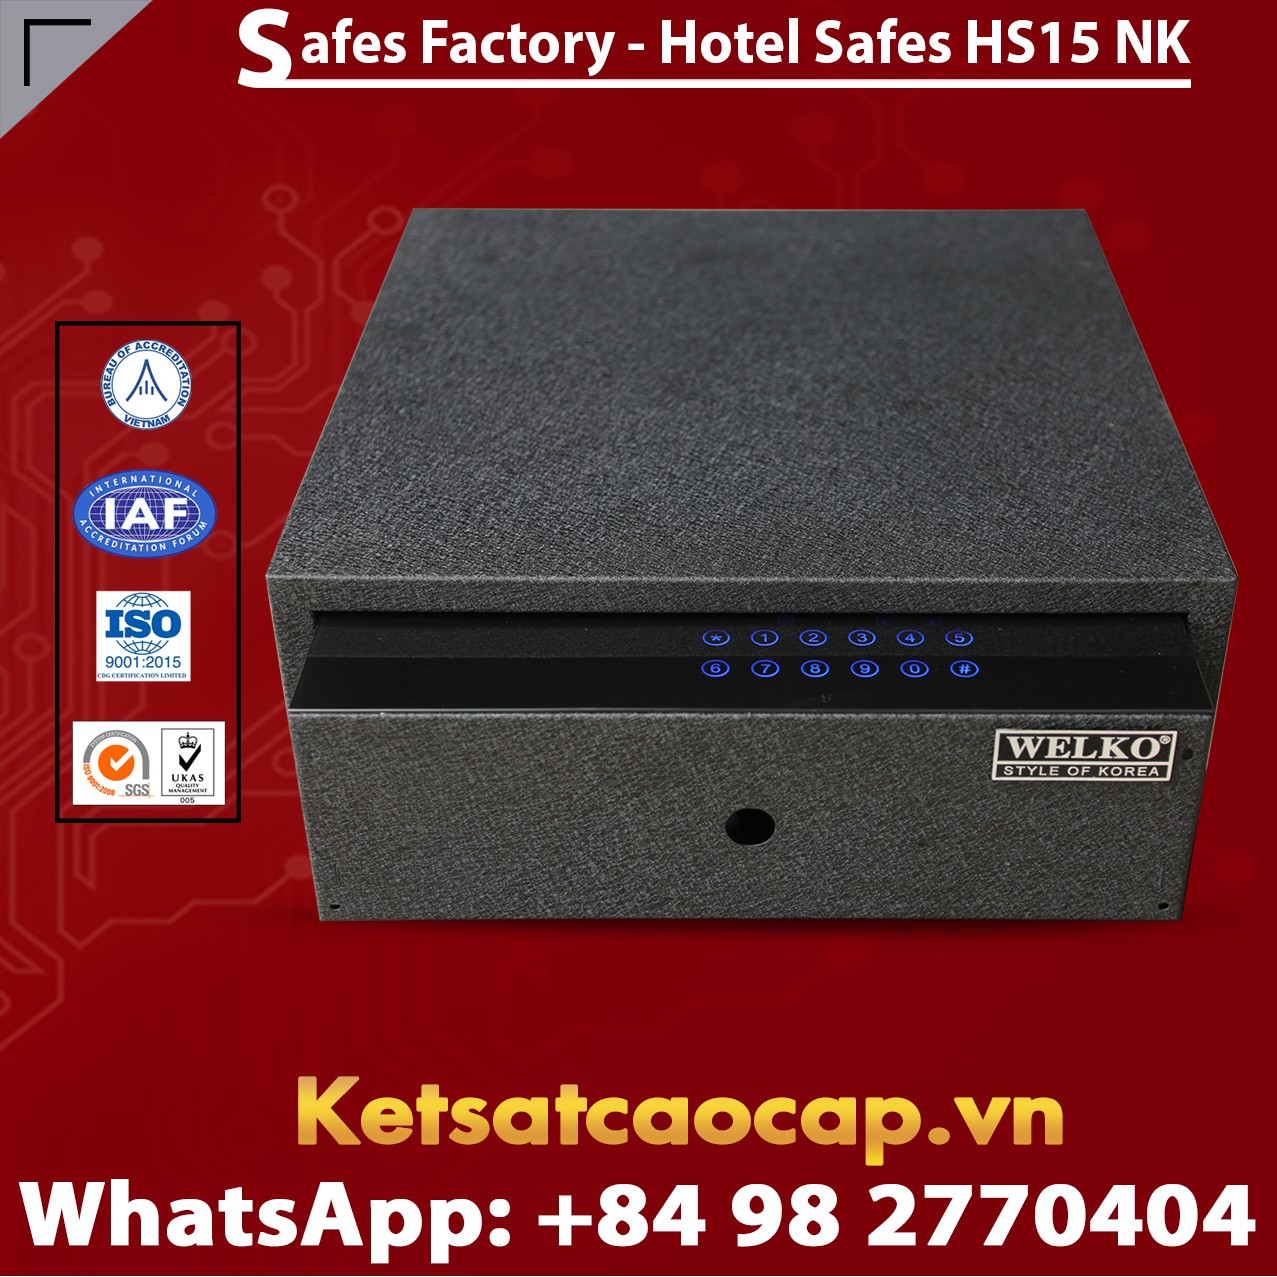 Hotel Safes Resort WELKO HS15 NK